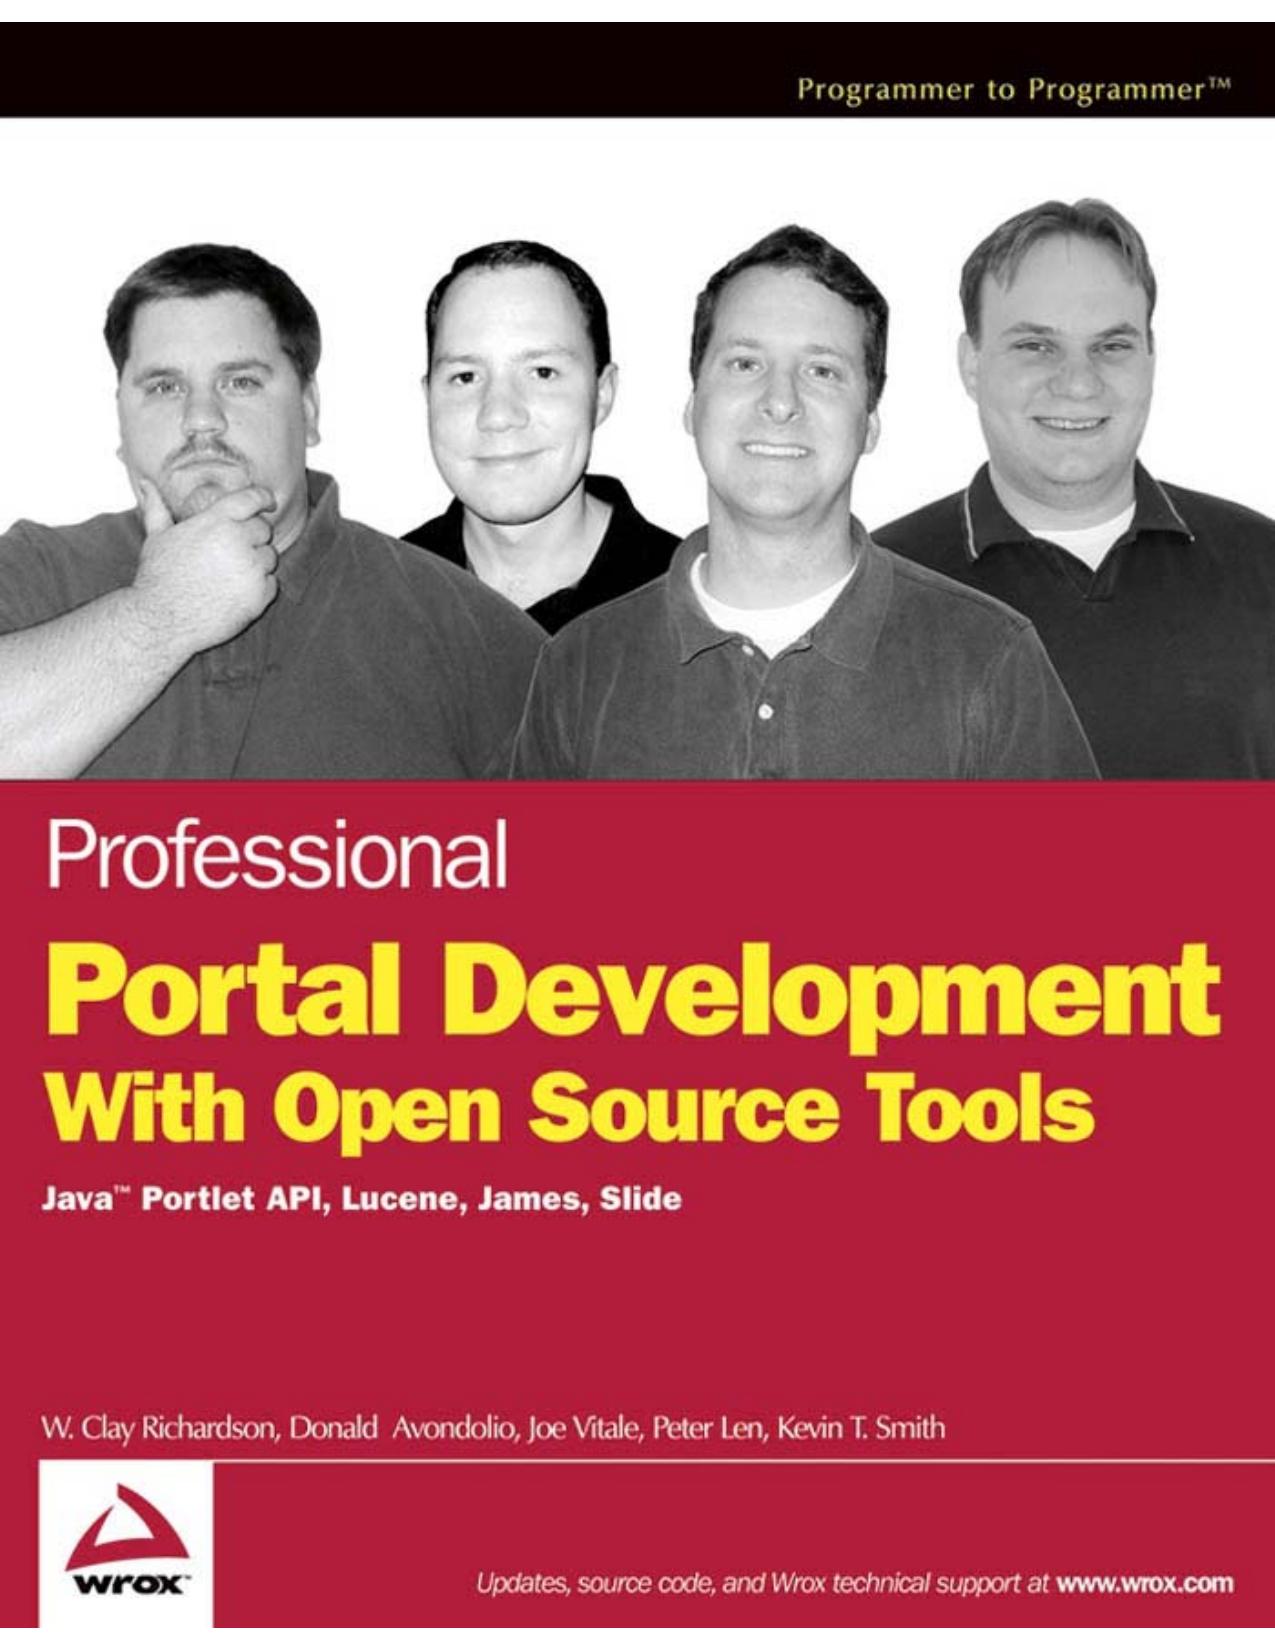 Professional Portal Development With Open Source Tools: JavaPortlet API, Lucene, James, Slide